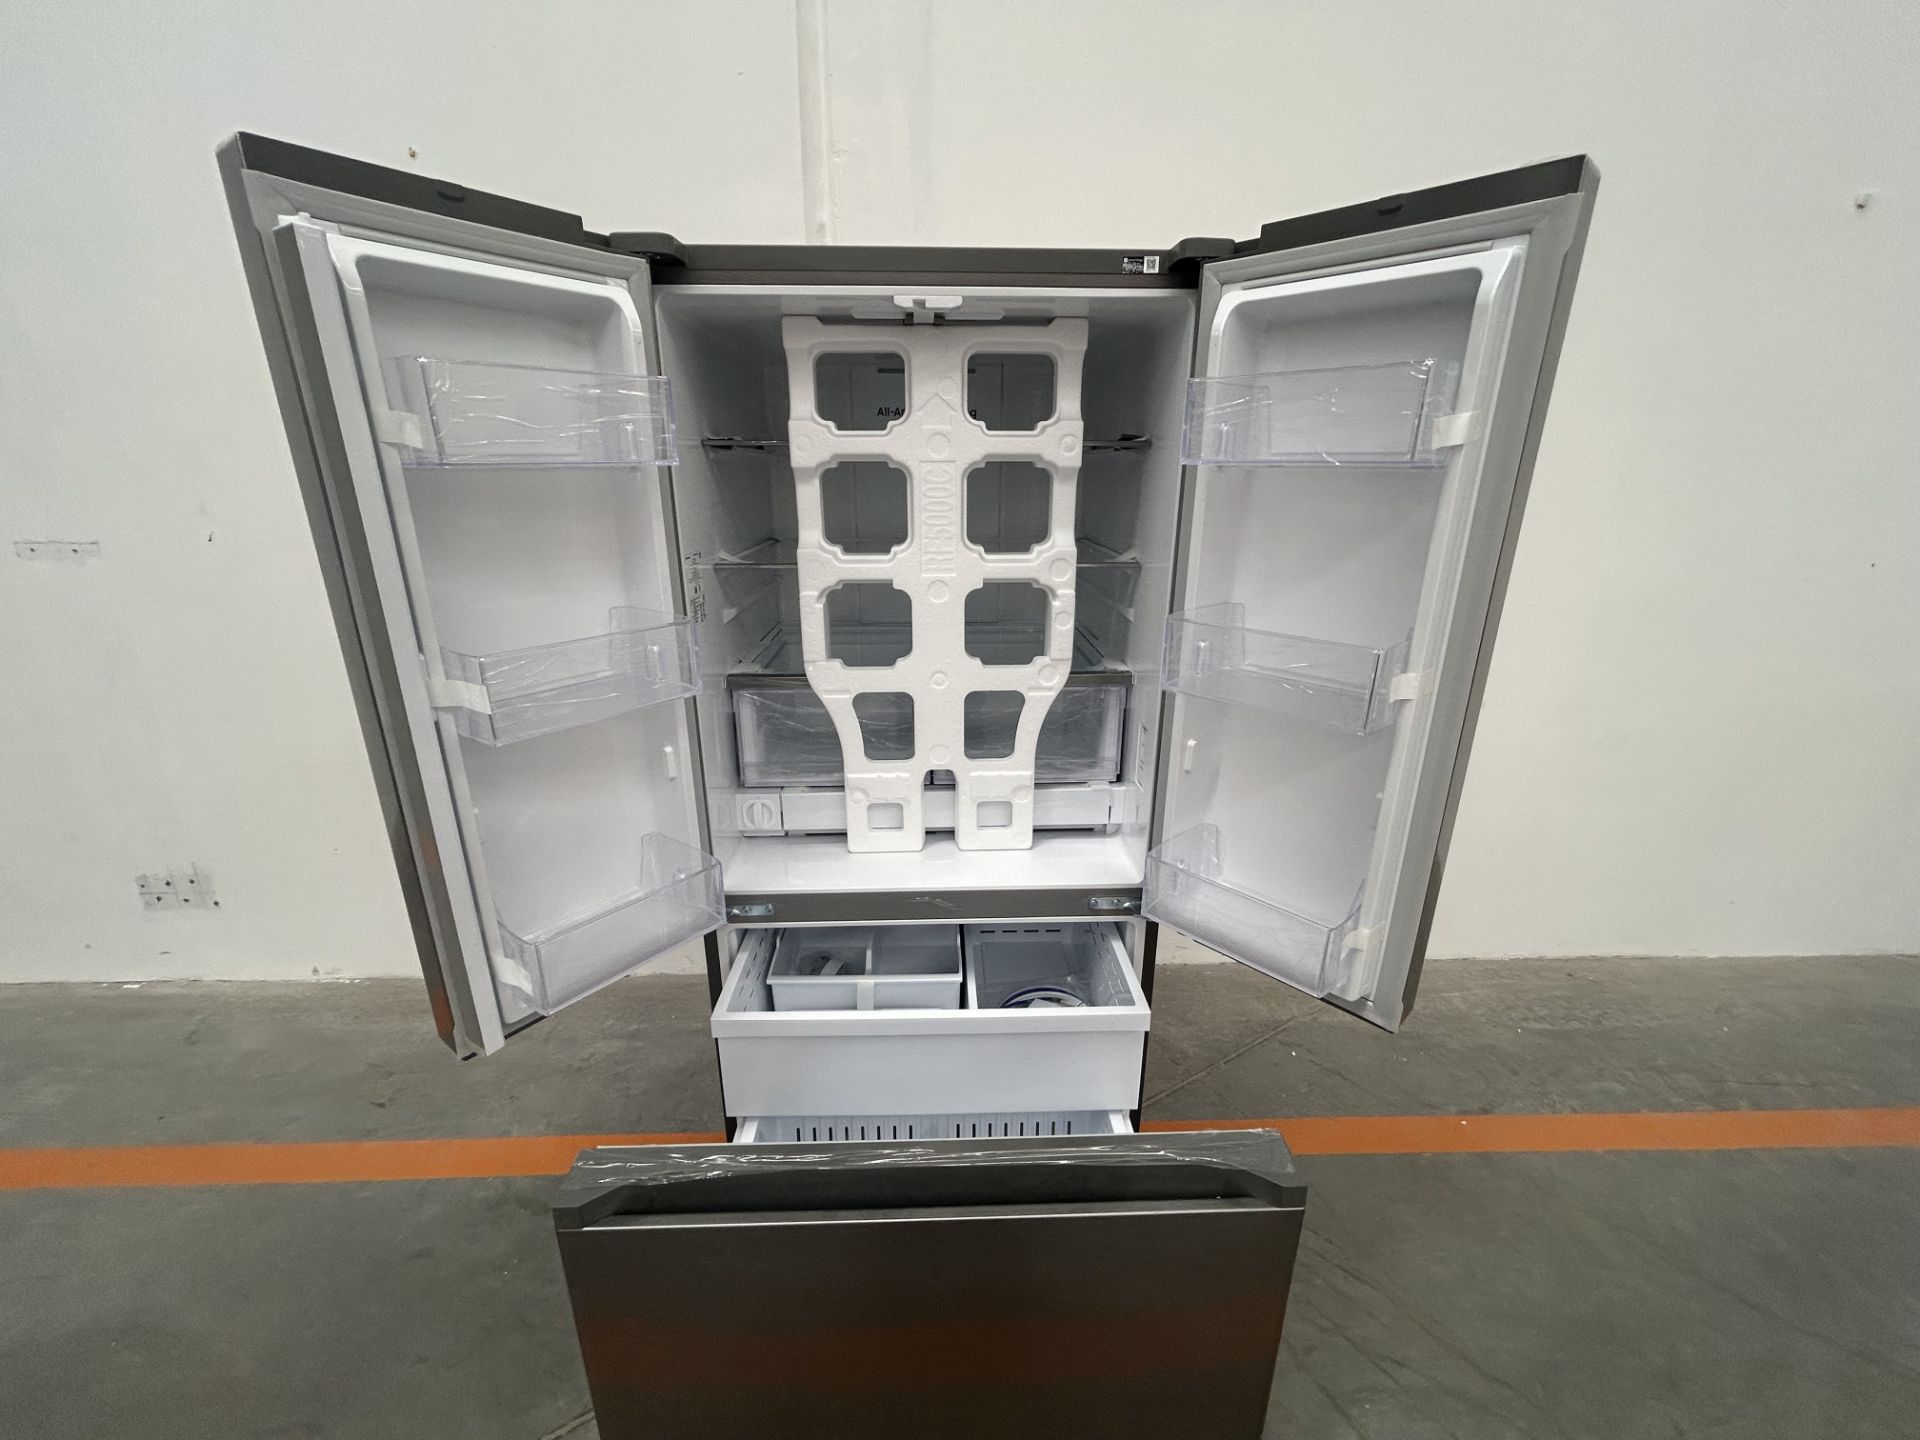 (NUEVO) Refrigerador Marca SAMSUNG, Modelo RF25C5151S9, Serie 00129J, Color GRIS - Image 4 of 4